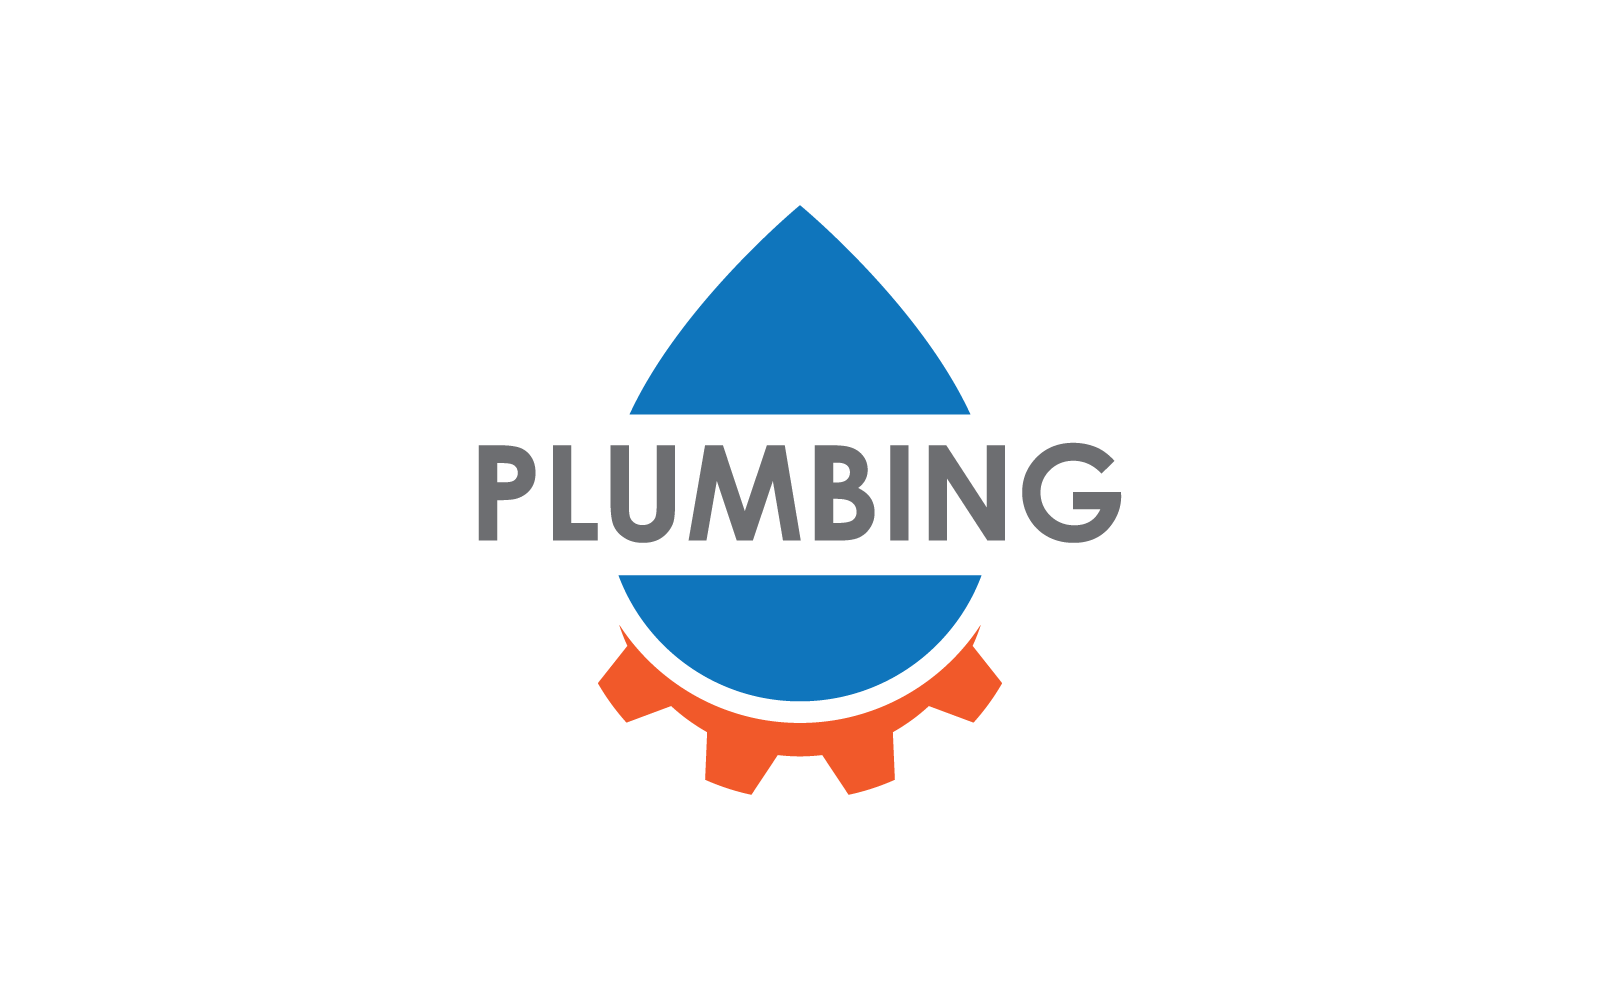 Plumbing illustration logo vector design business template Logo Template